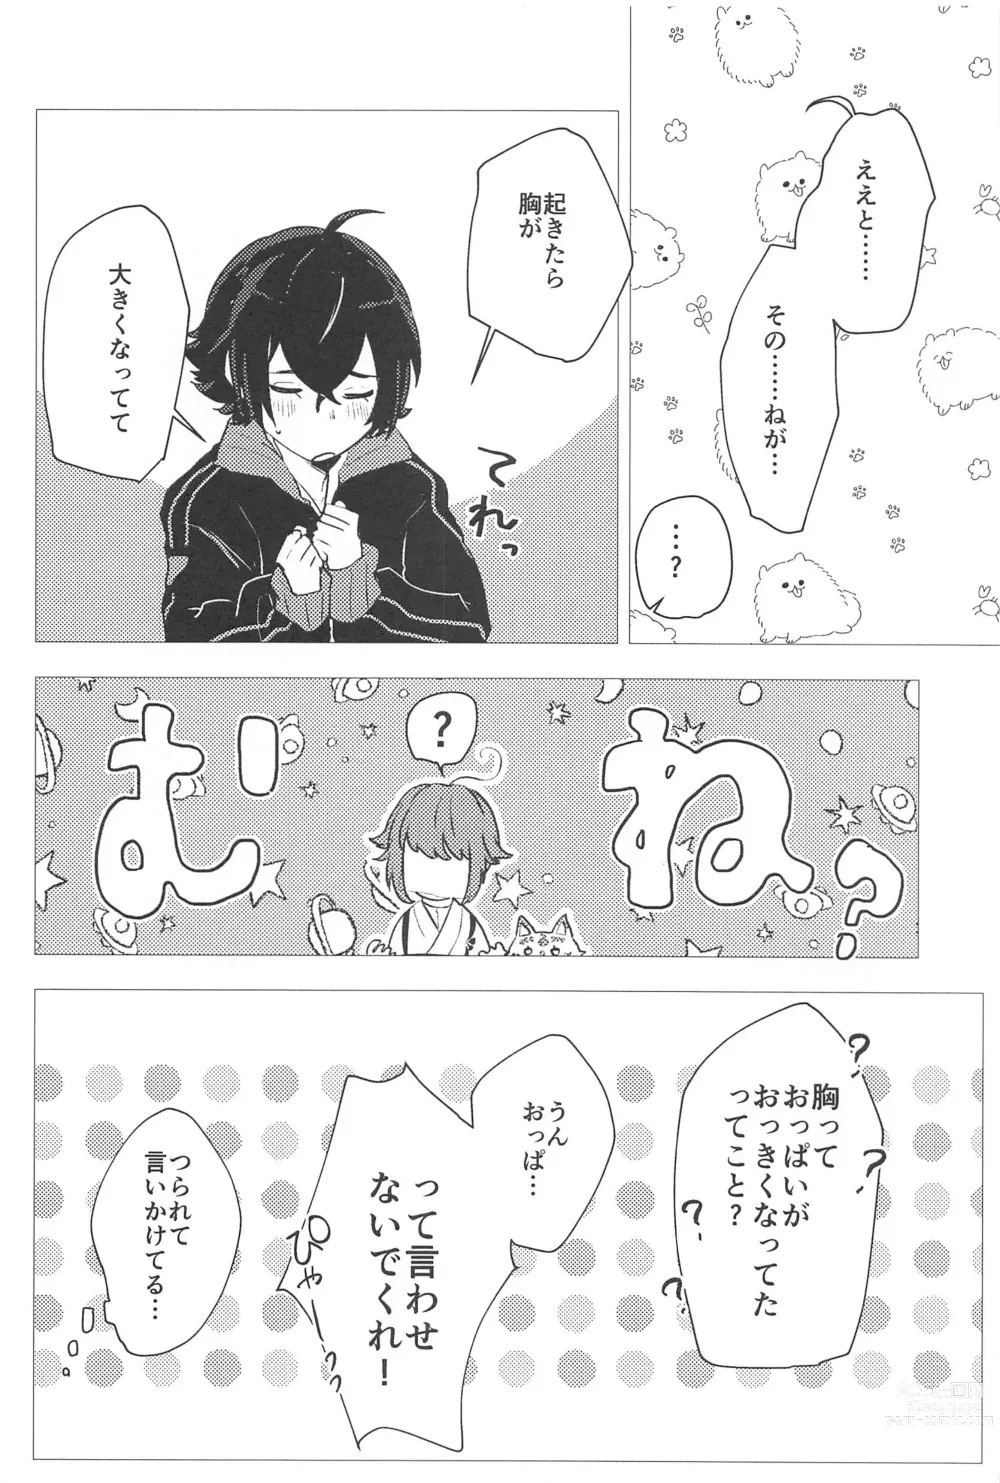 Page 7 of doujinshi Konnanotte Nai!